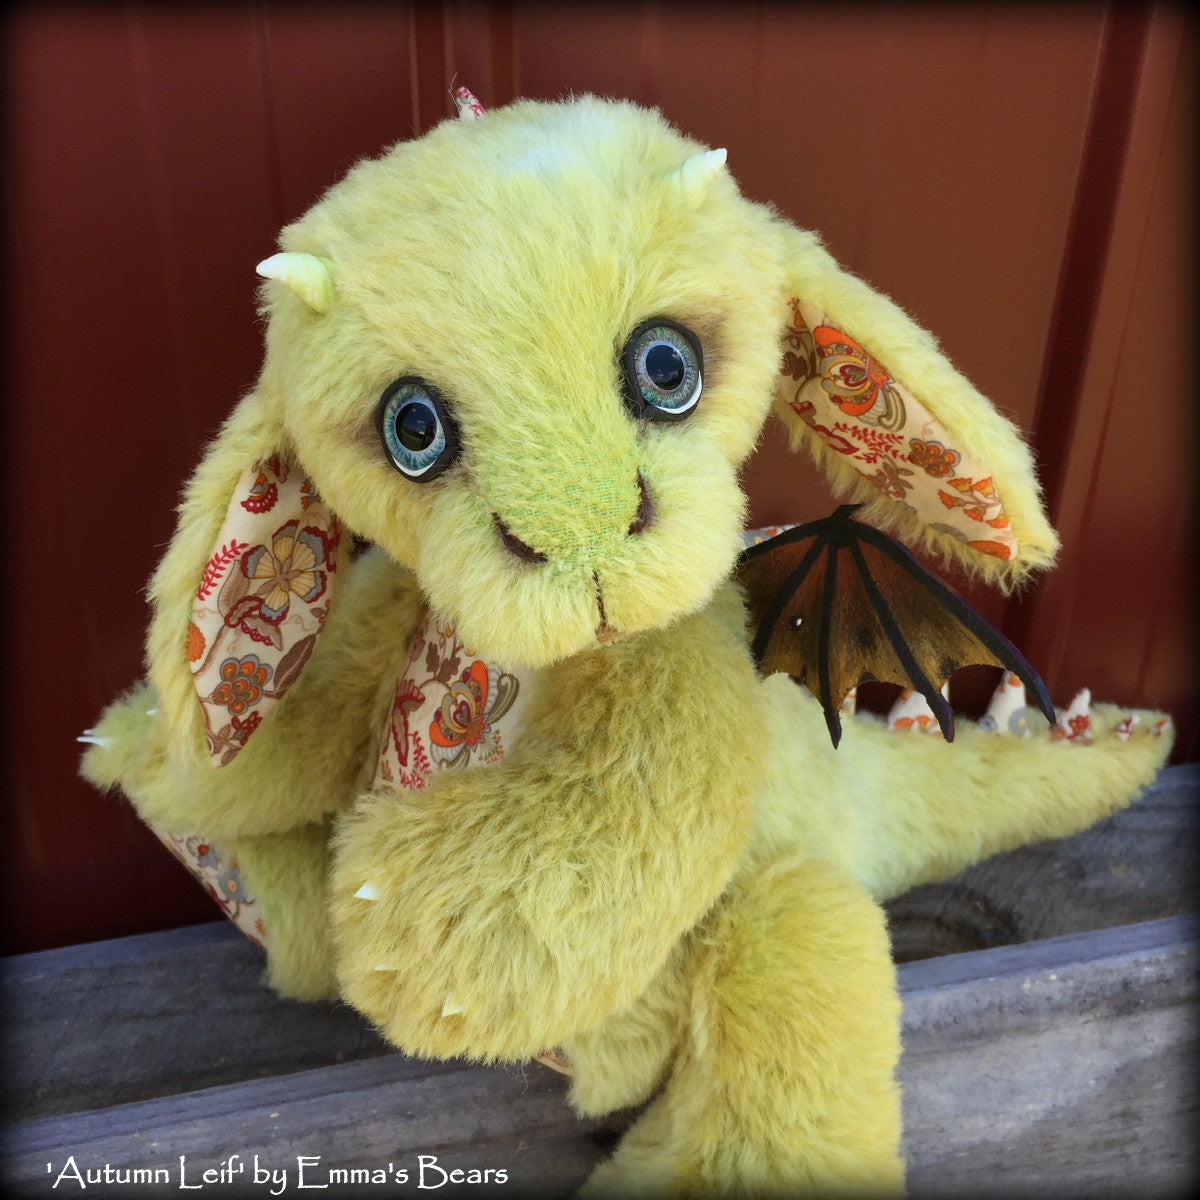 Autumn Leif DRAGON - 15in MOHAIR Artist Baby Dragon by Emmas Bears - OOAK